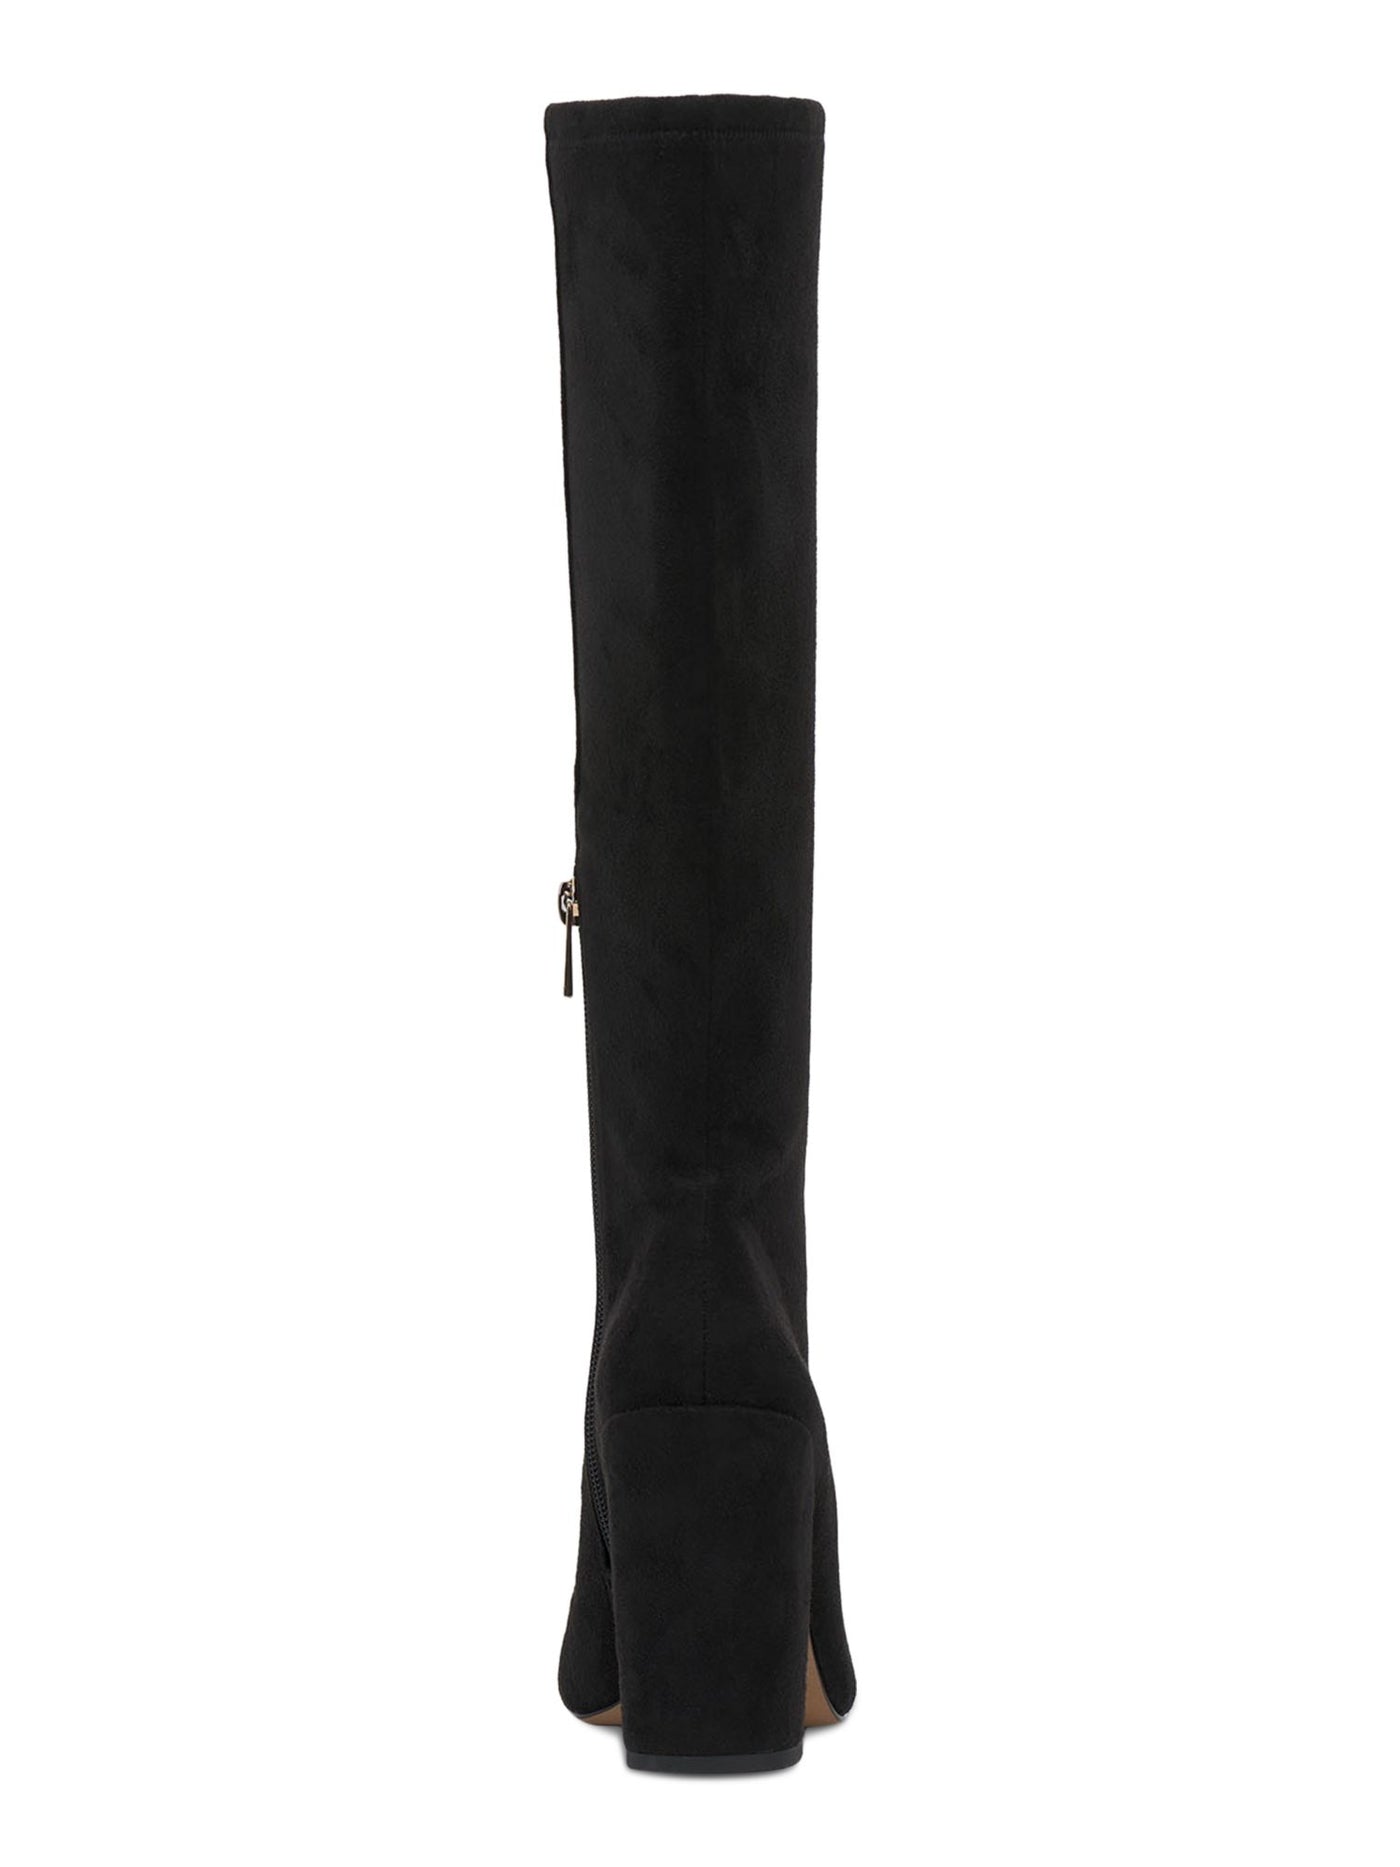 JESSICA SIMPSON Womens Black Padded Benni Round Toe Block Heel Zip-Up Dress Boots 9.5 M